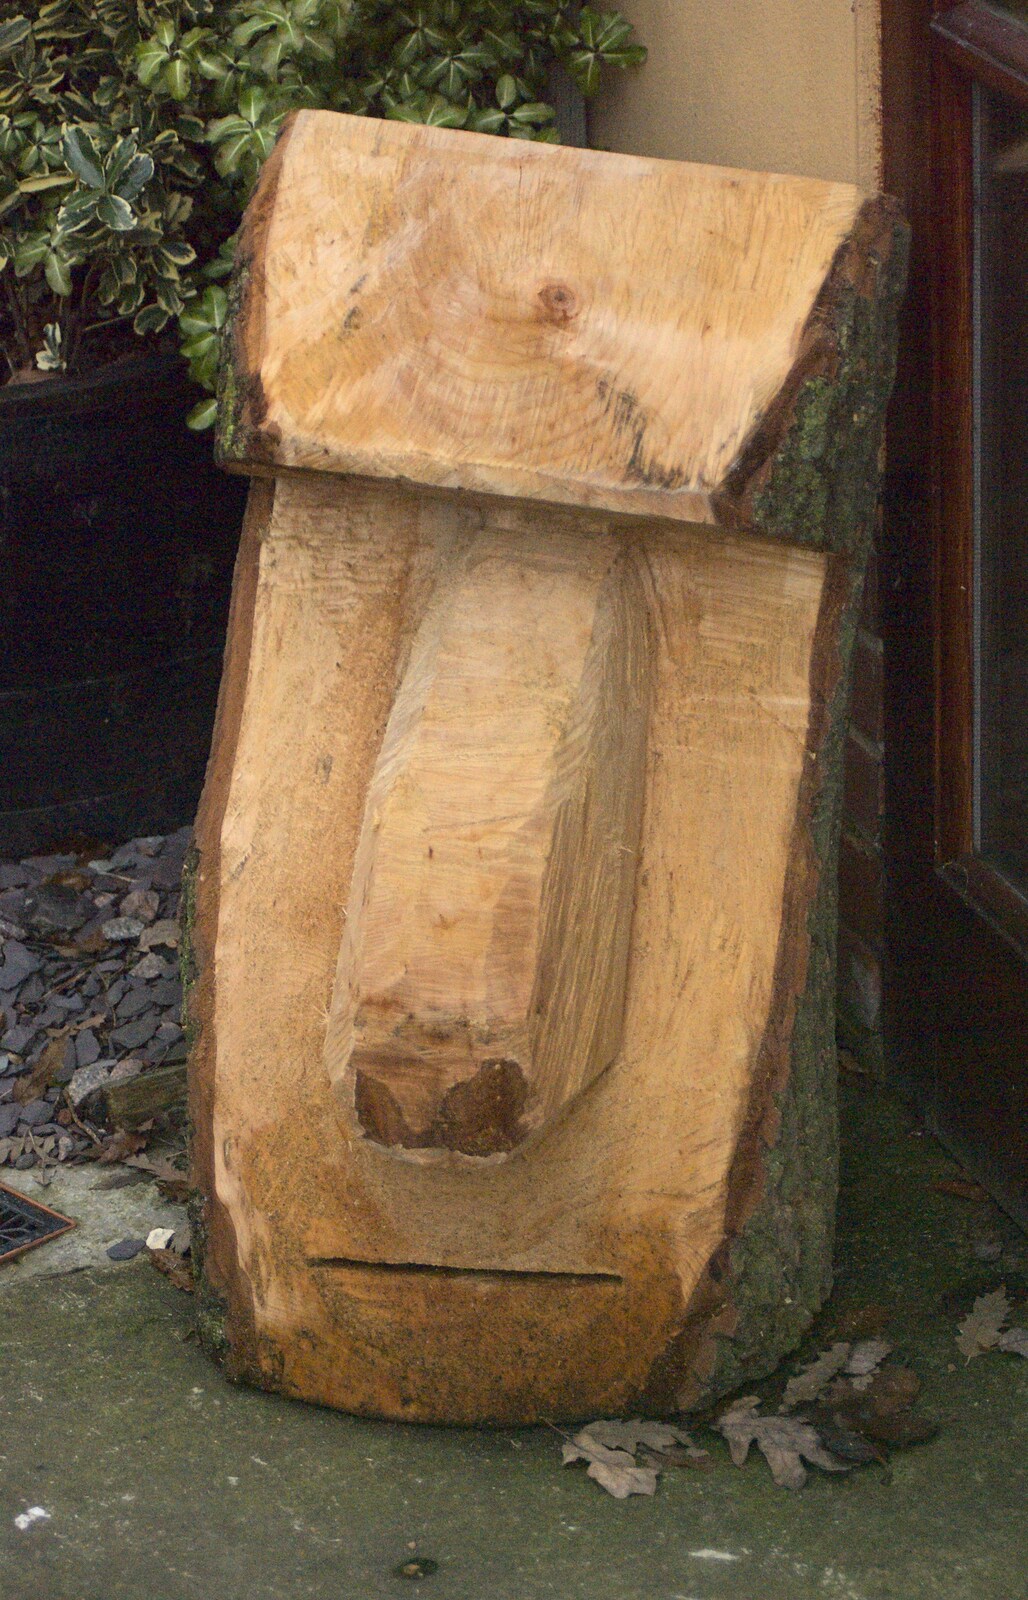 Thornham Walks, and a Swiss Fondue, Thornham and Cambridge - 23rd January 2011: A carved wooden head, like a Moai